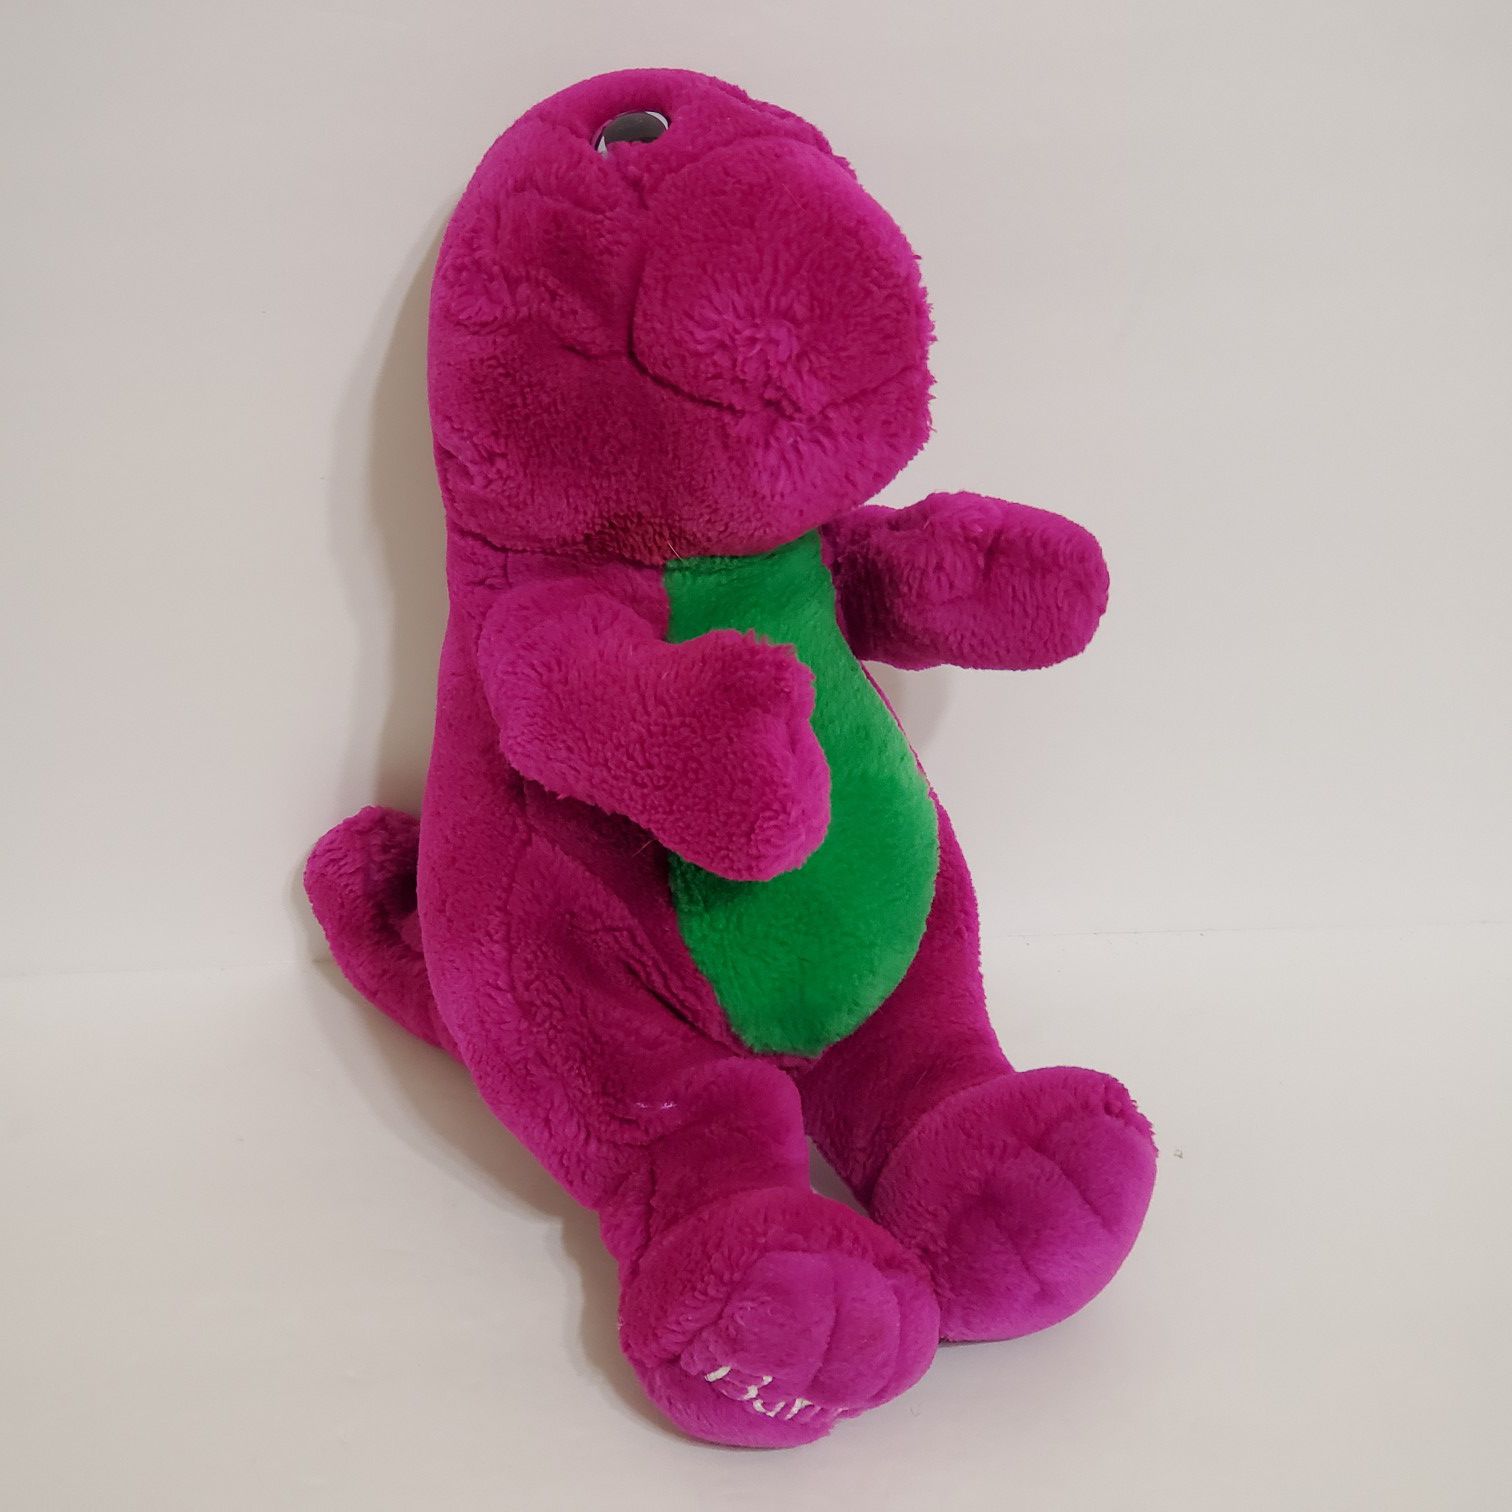 Barney the Dinosaur plush 13" Closed Mouth 1992